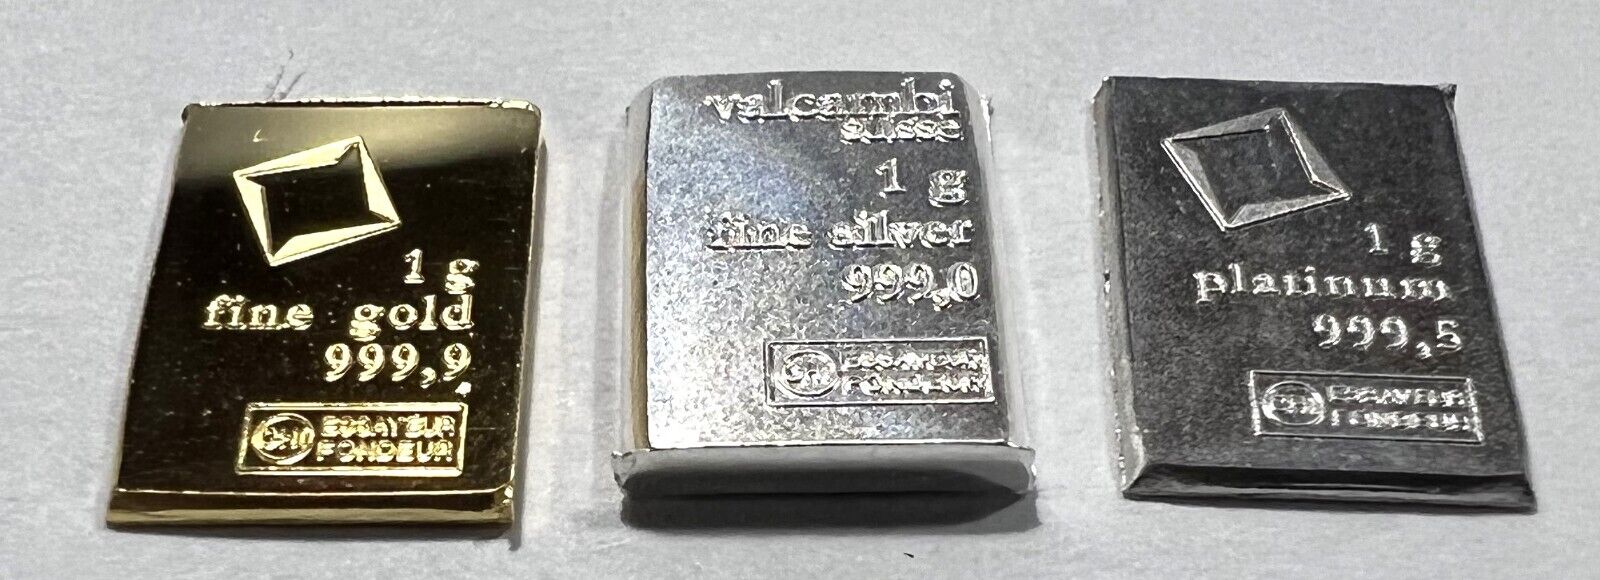 Valcambi - 3 - 1 Gram - Gold , Platinum  And Silver Bars